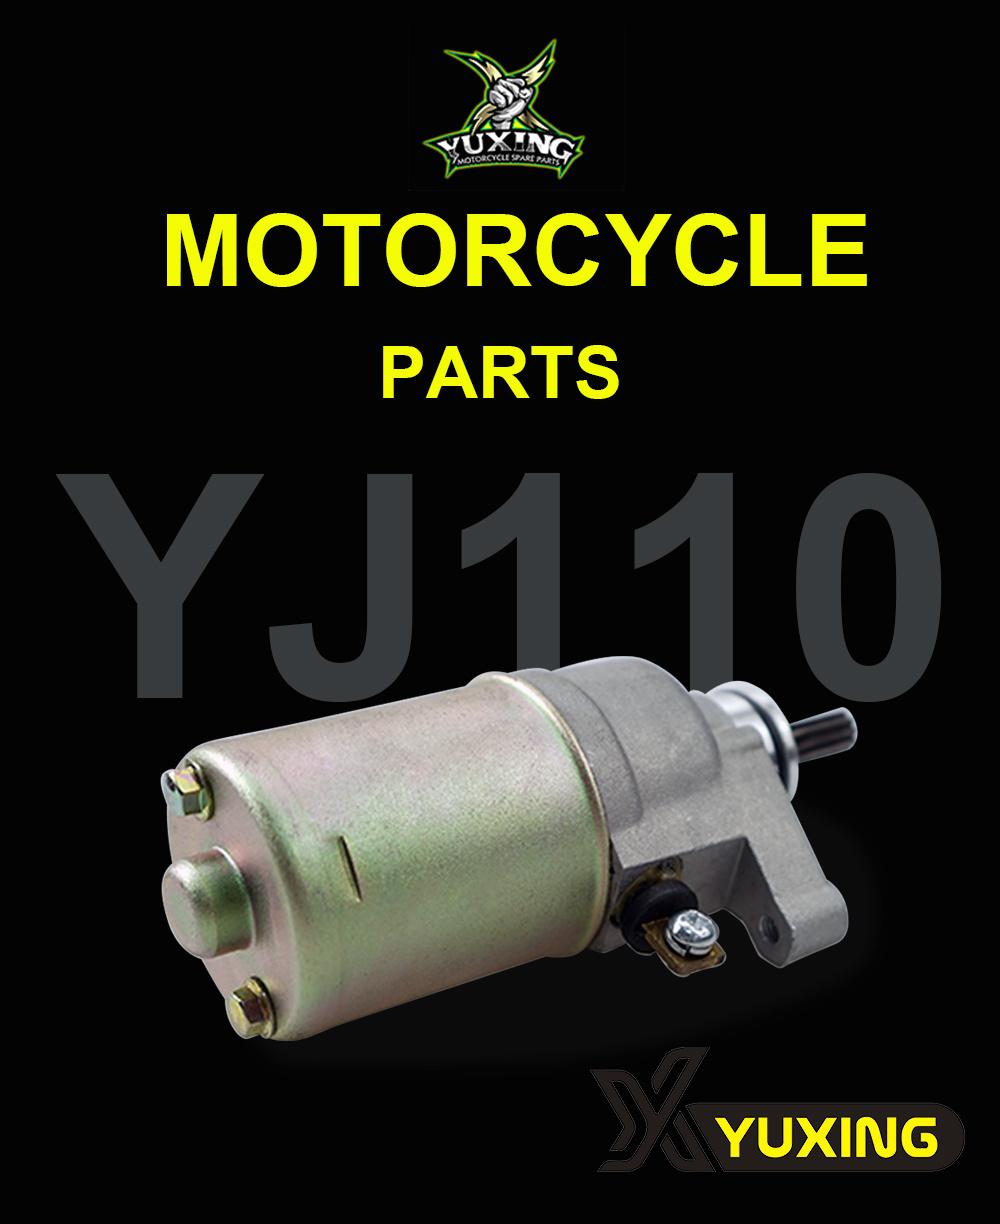 Motorcycle Enging Part Motorcycle Starting Motor for Jy110